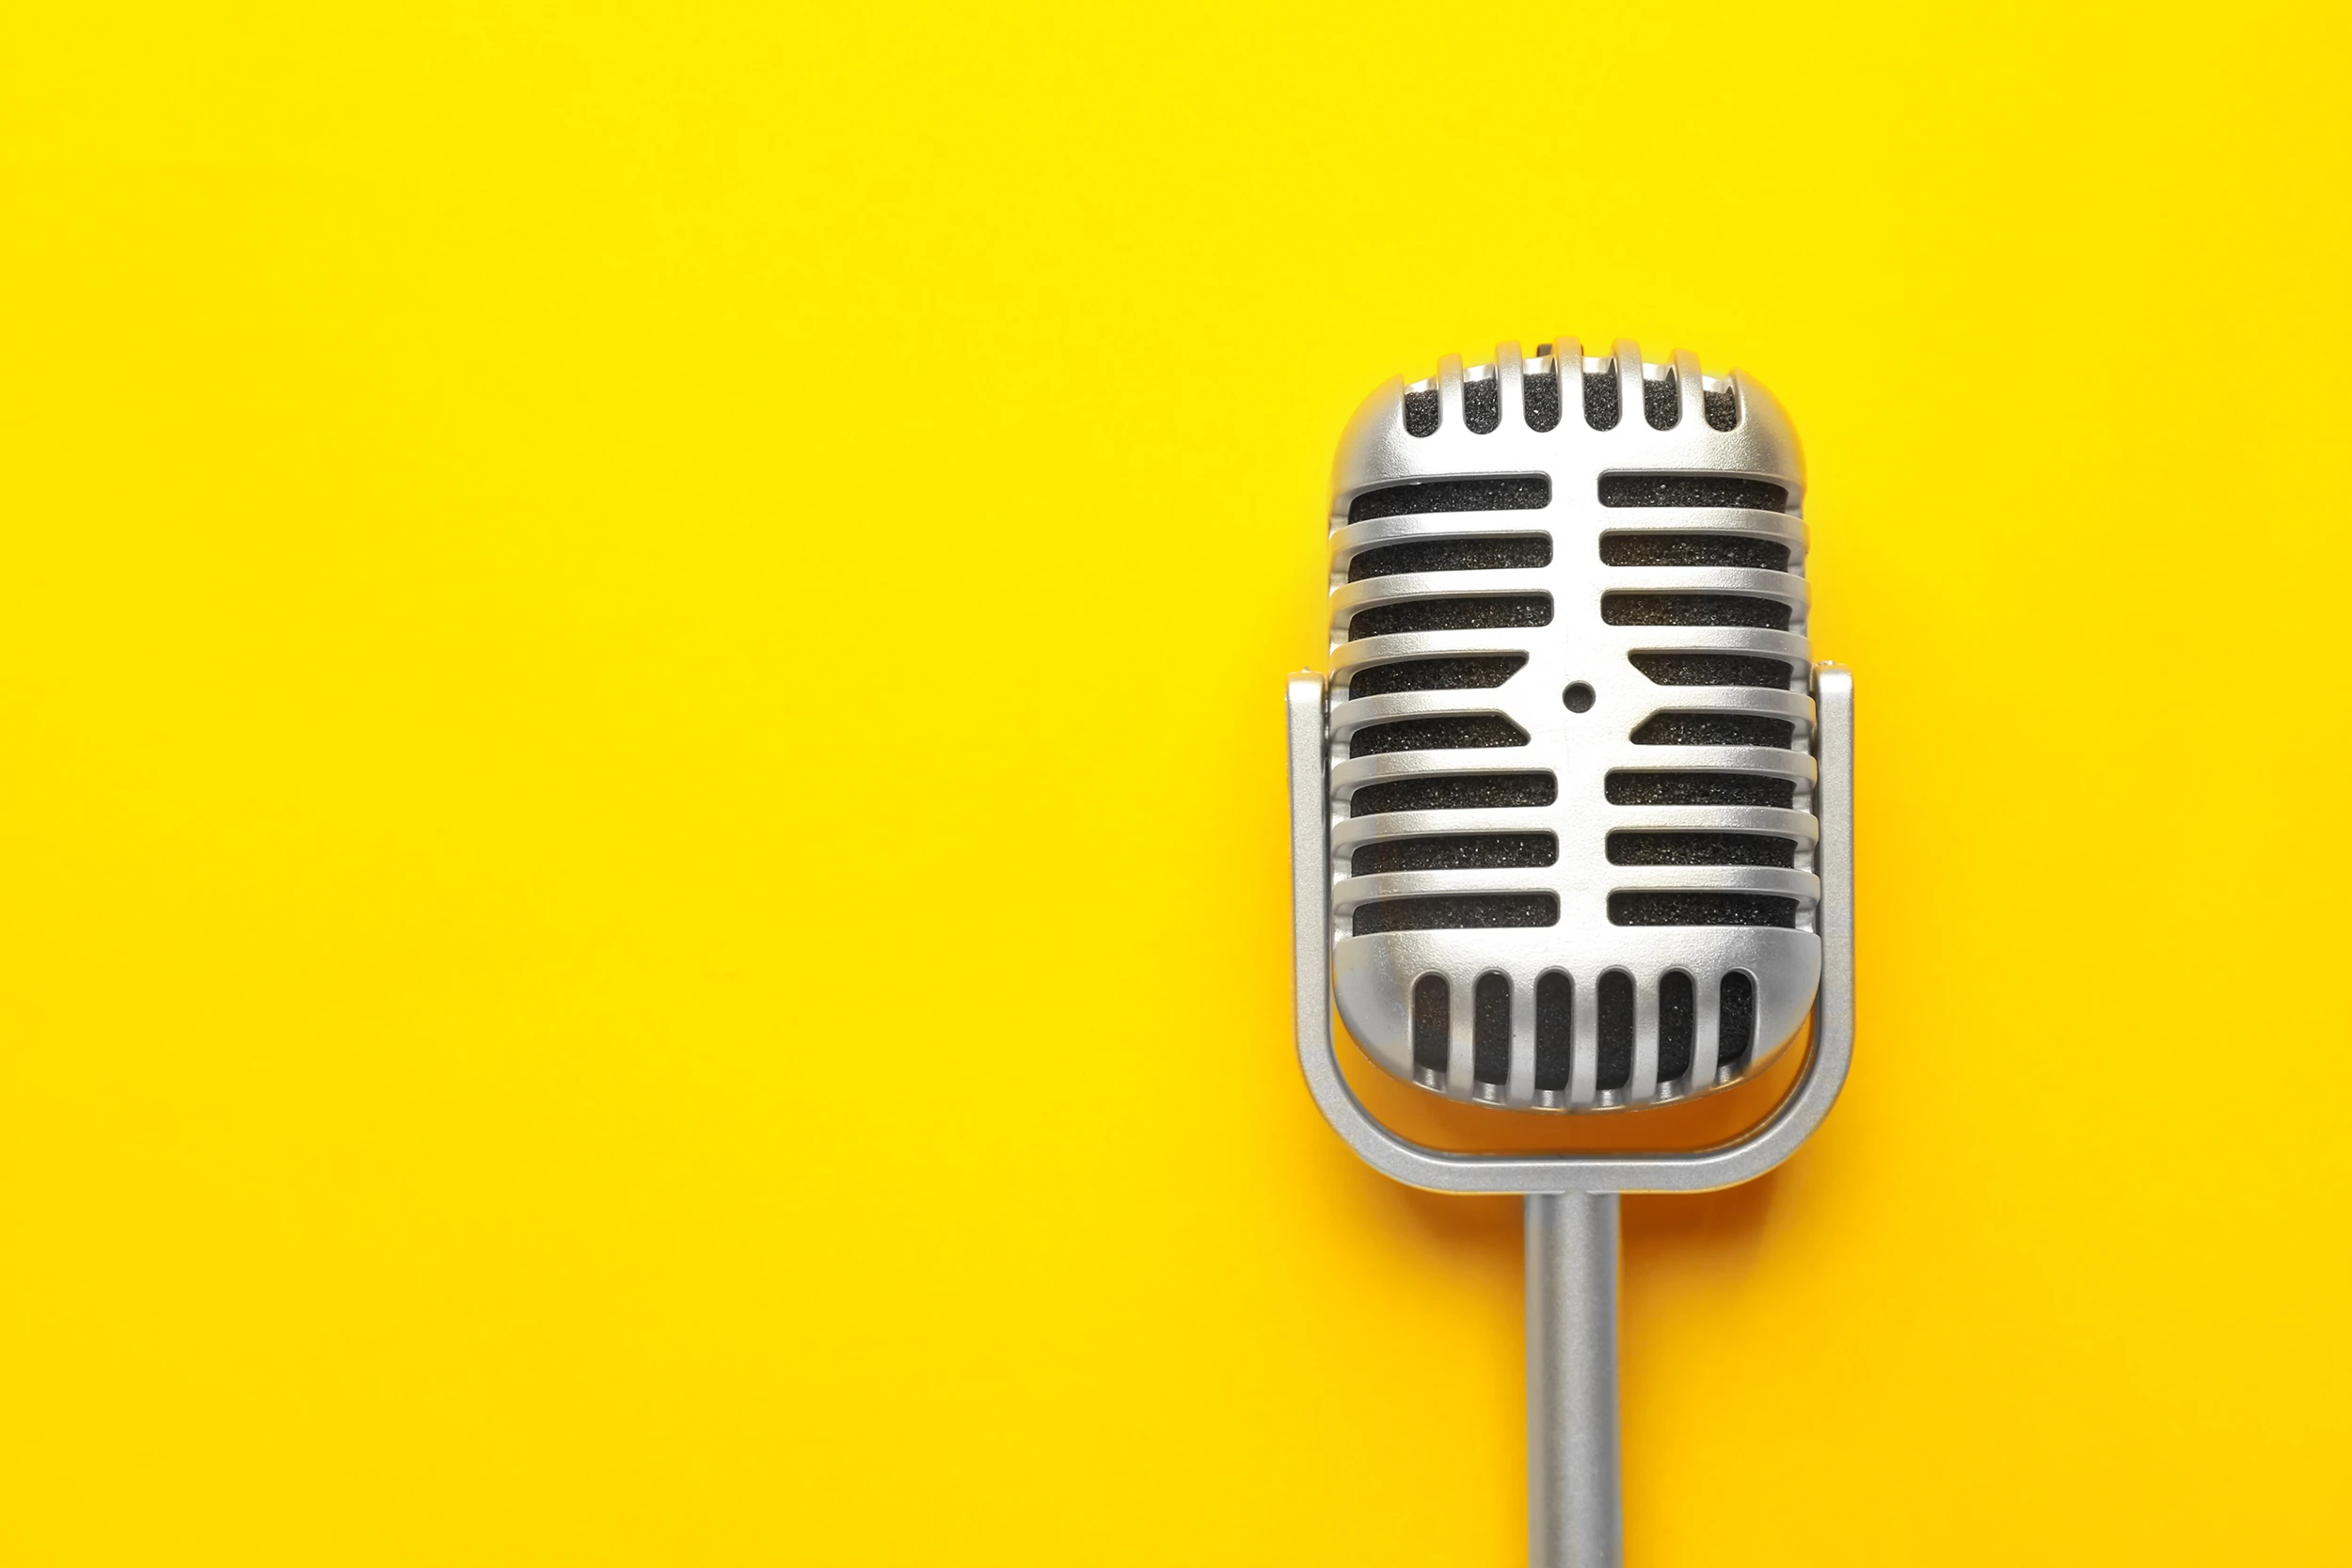 Retro microphone yellow background